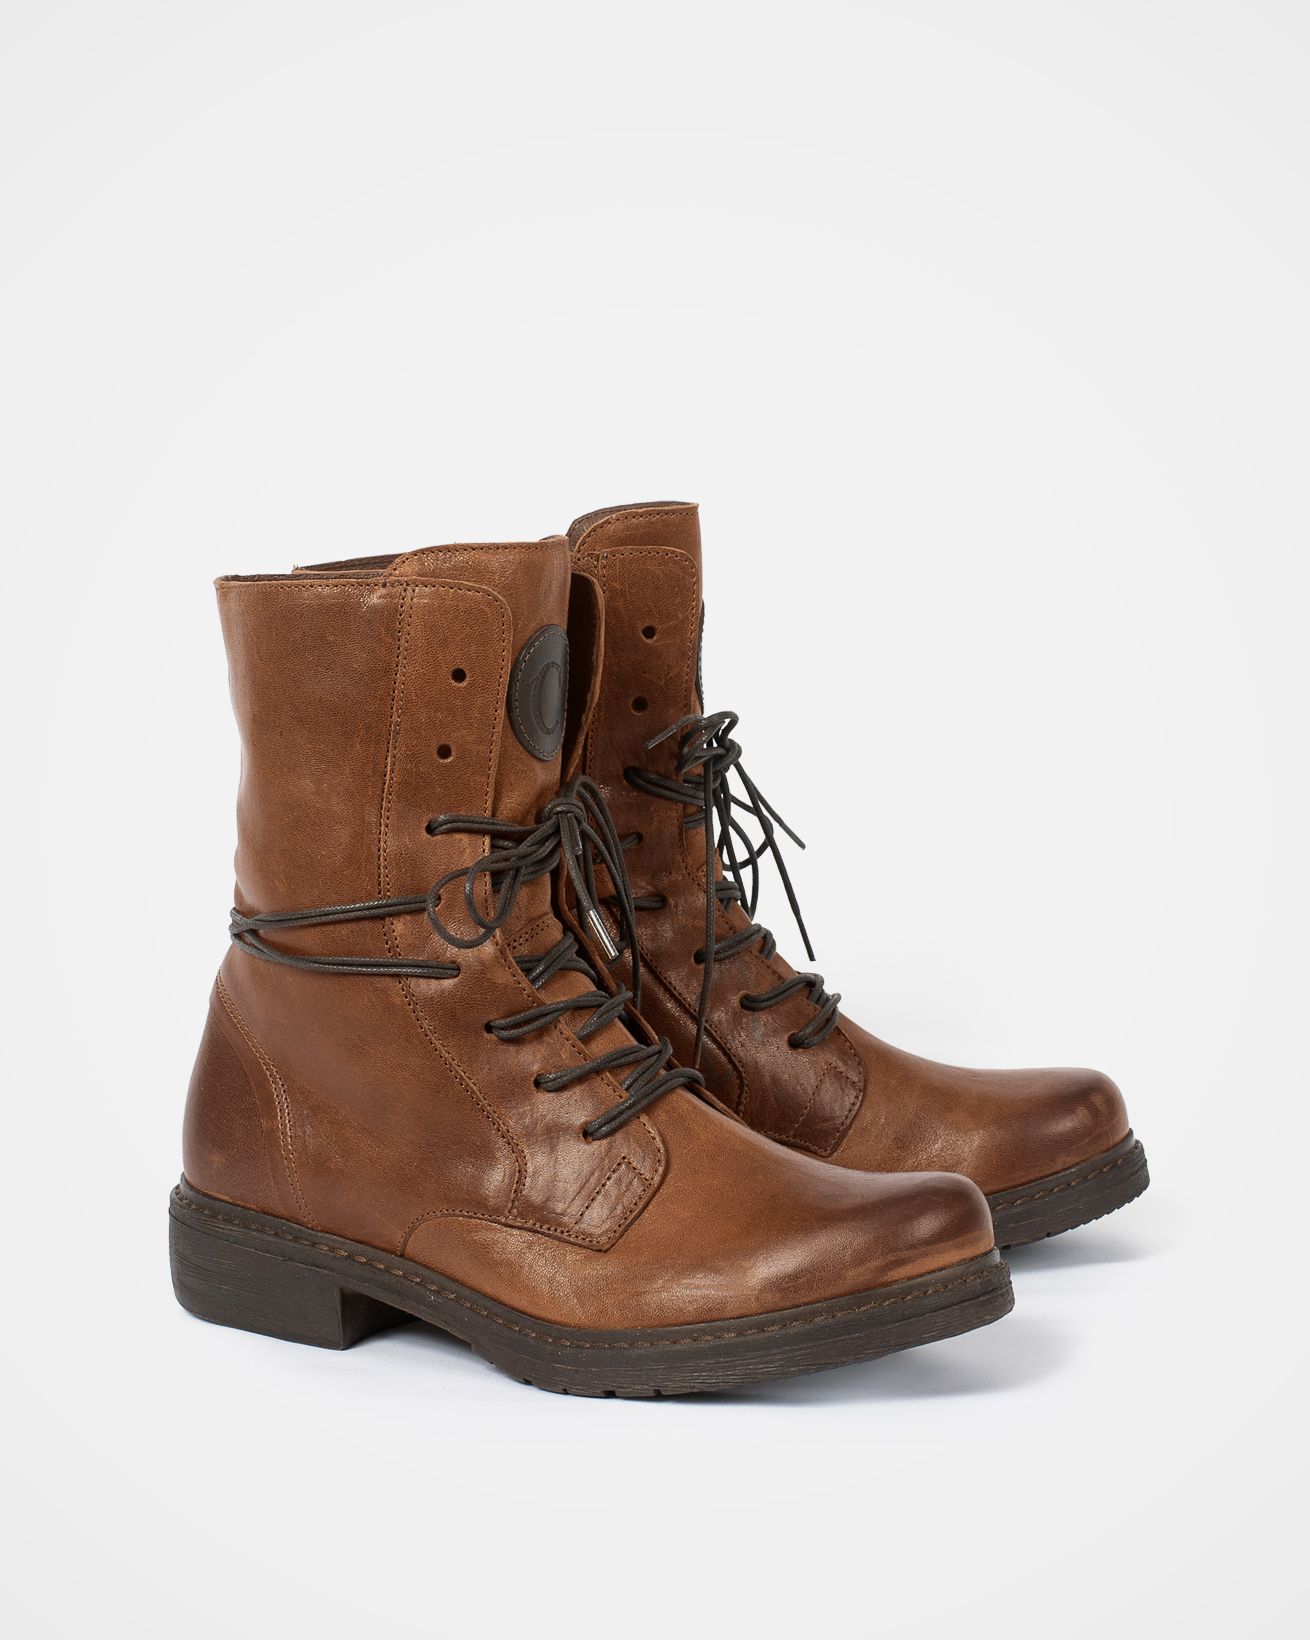 7725-ladies-derby-boots-antique-brown-pair-web-lfs-rev.jpg